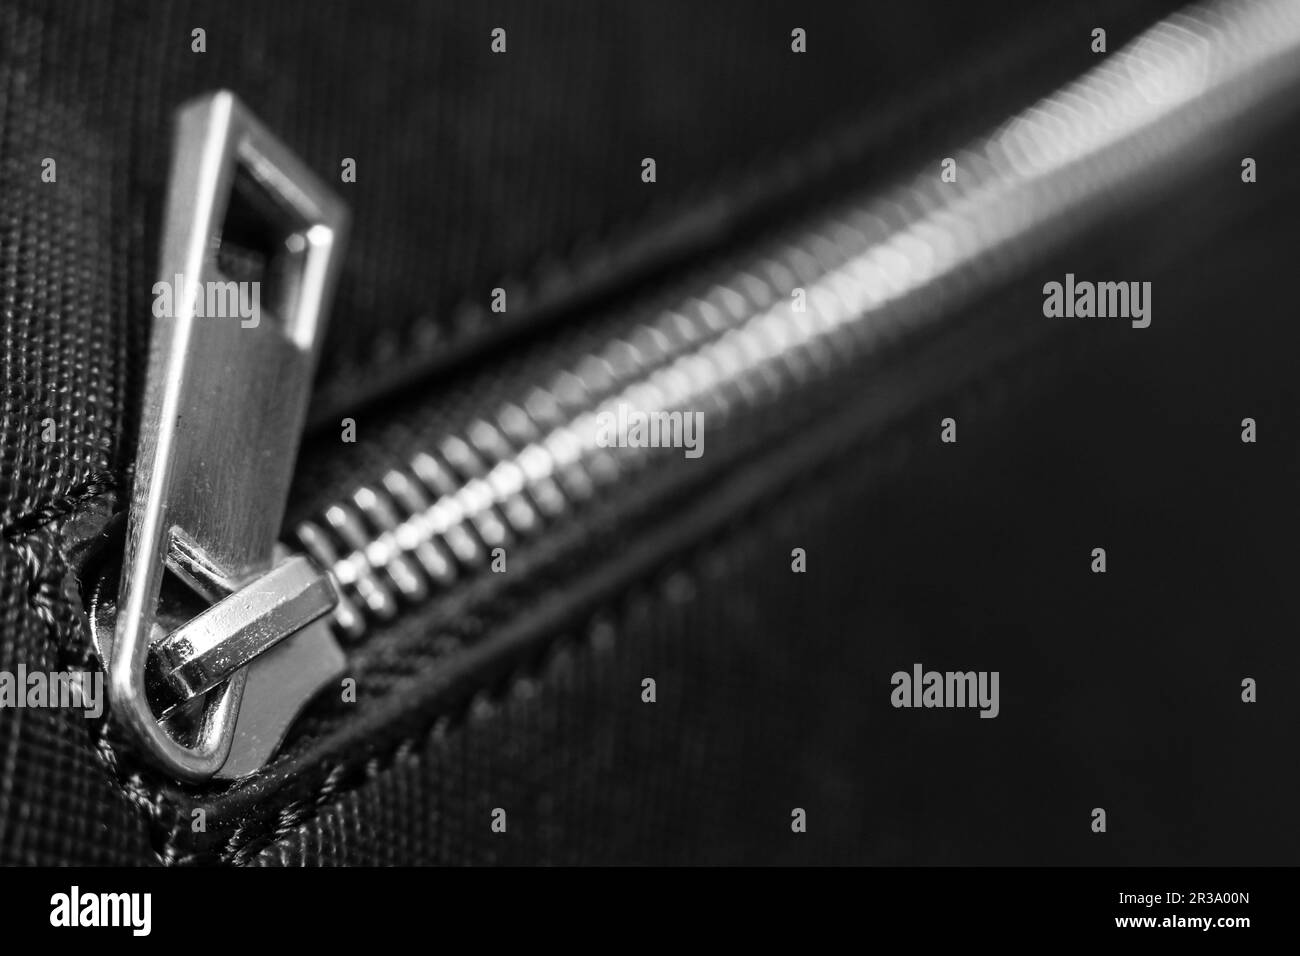 Zip fastener on black handbag Stock Photo